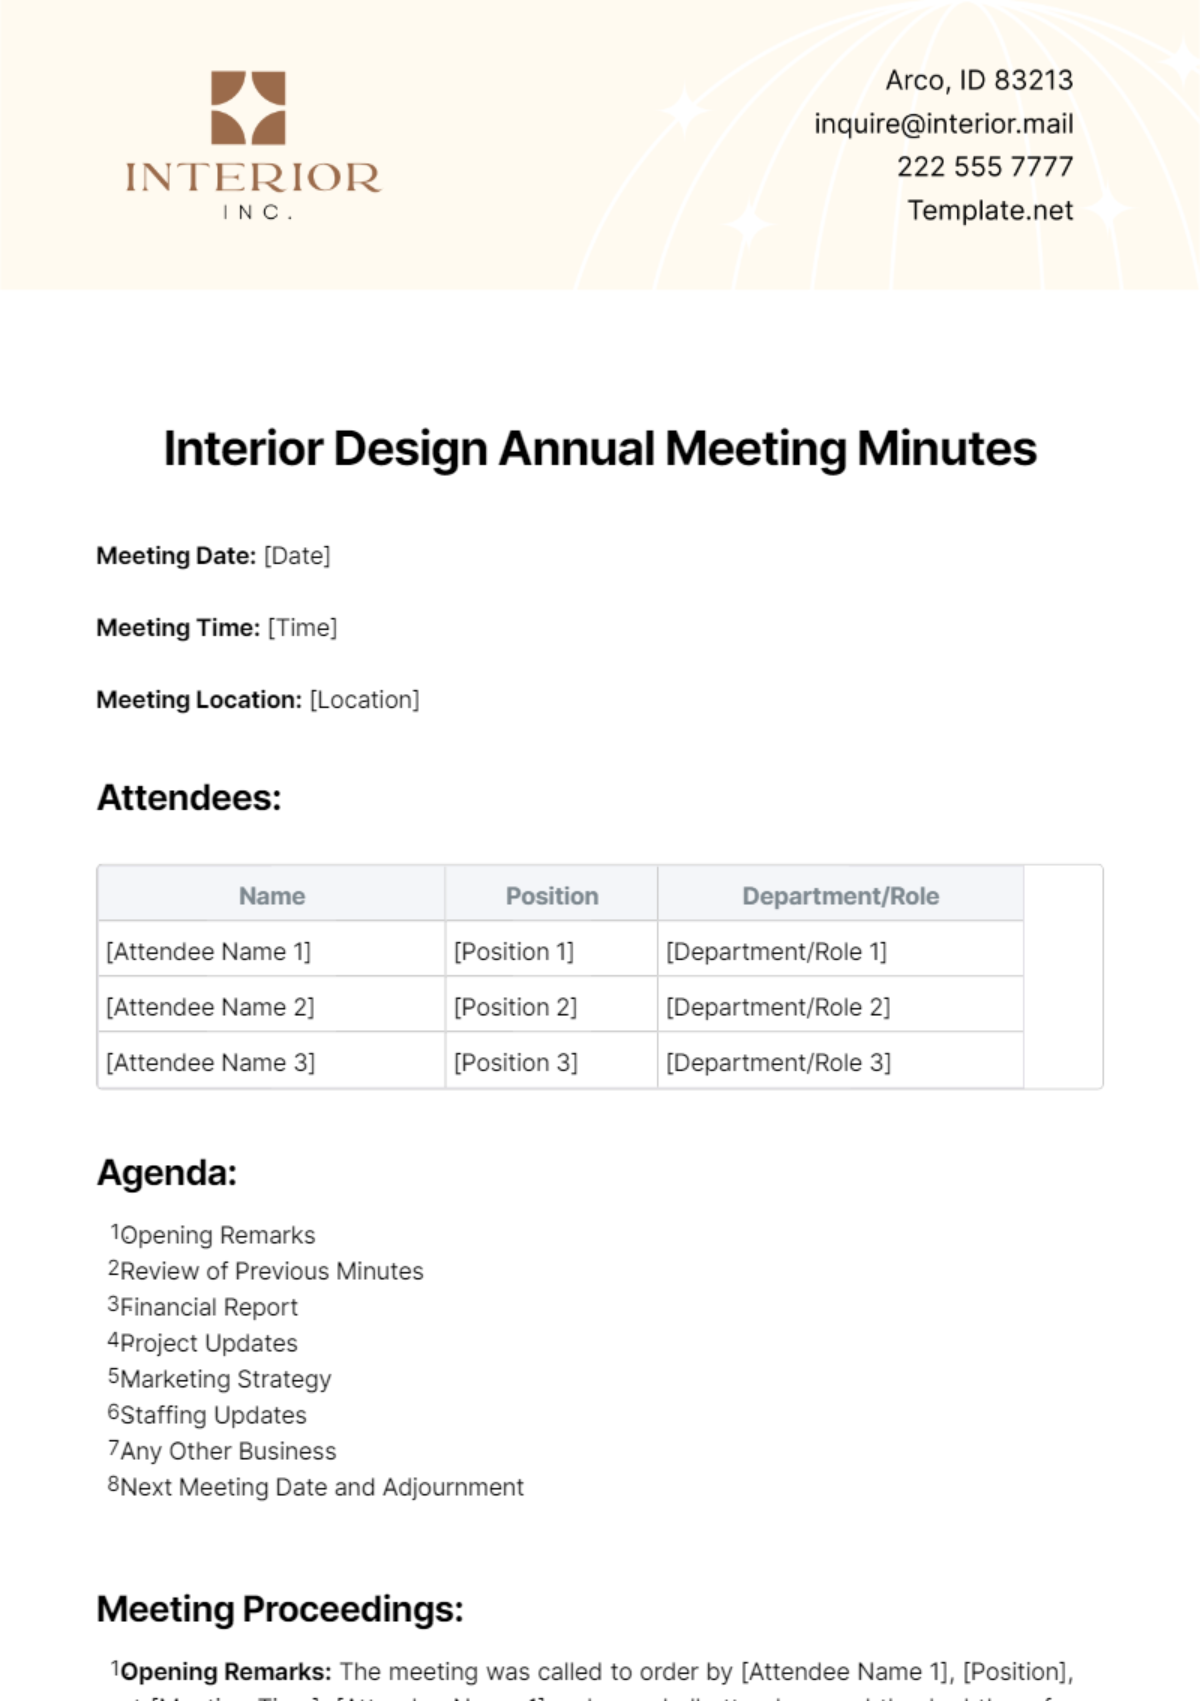 Interior Design Annual Meeting Minutes Template